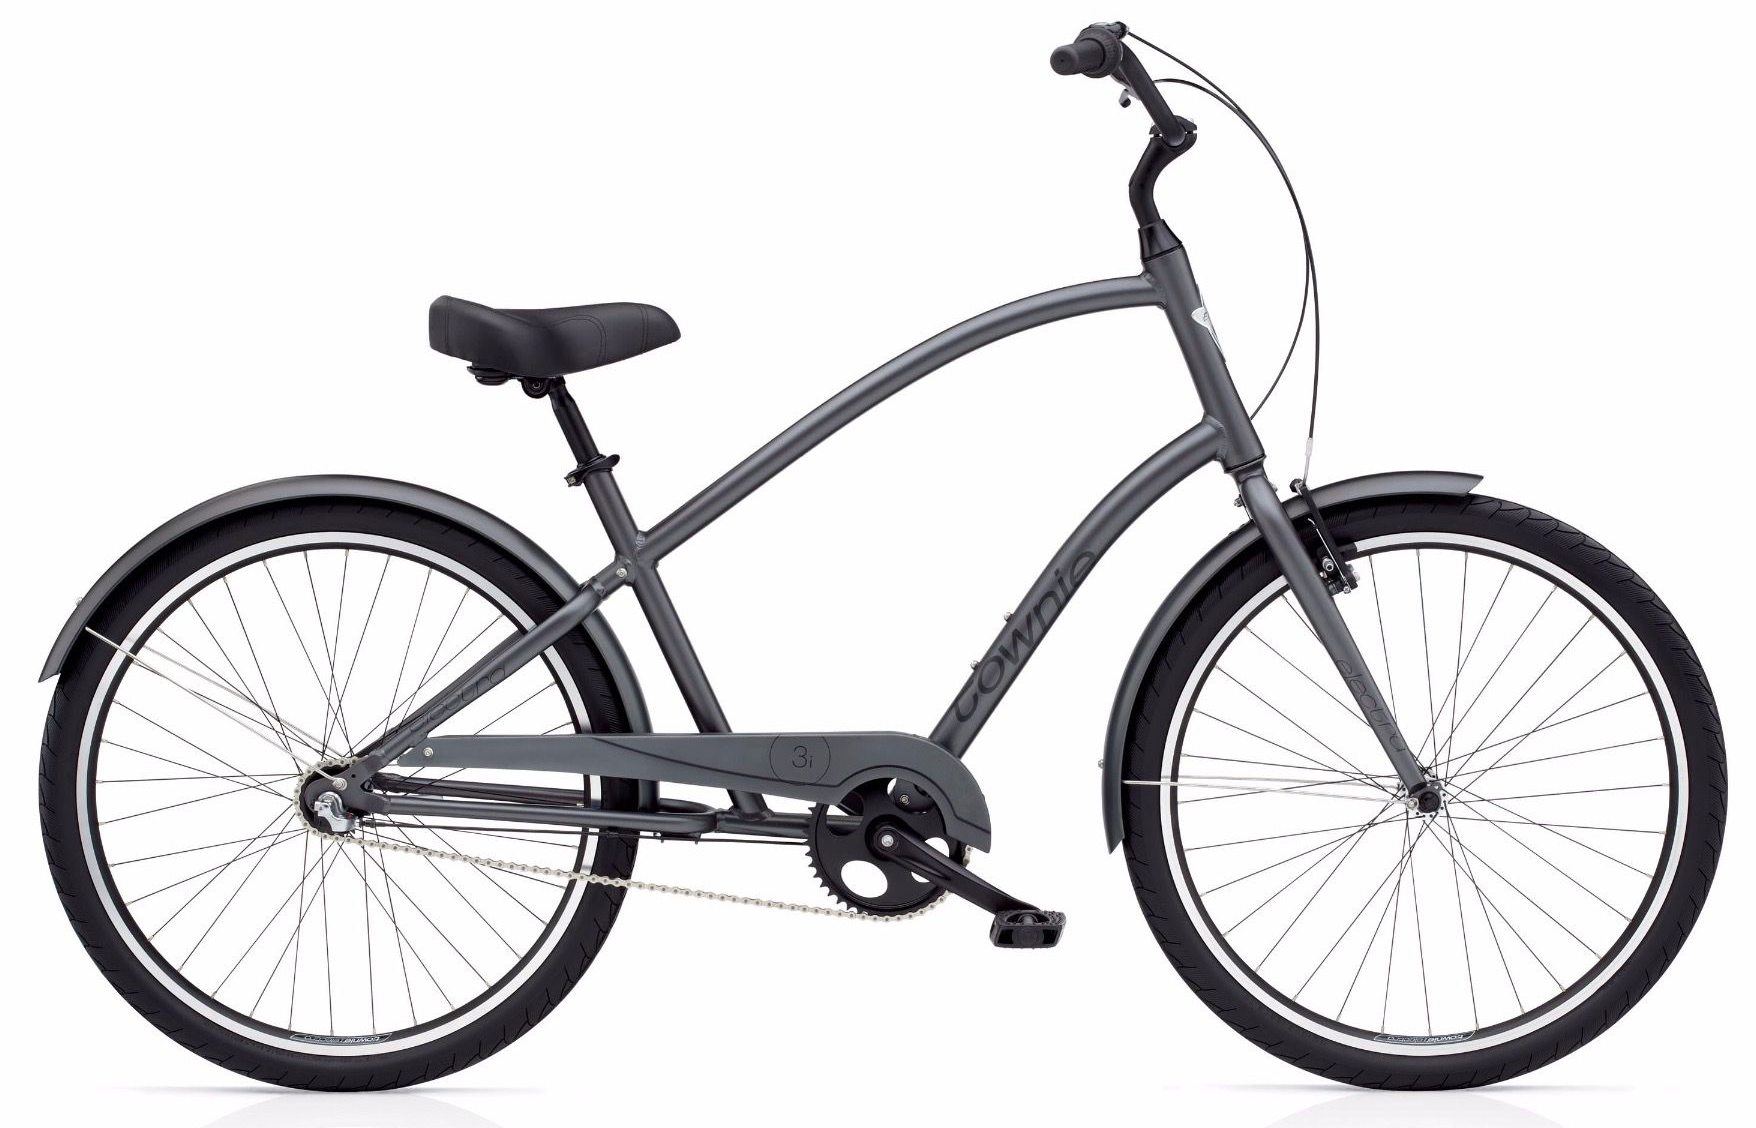  Велосипед Electra Townie Original 3i 2019